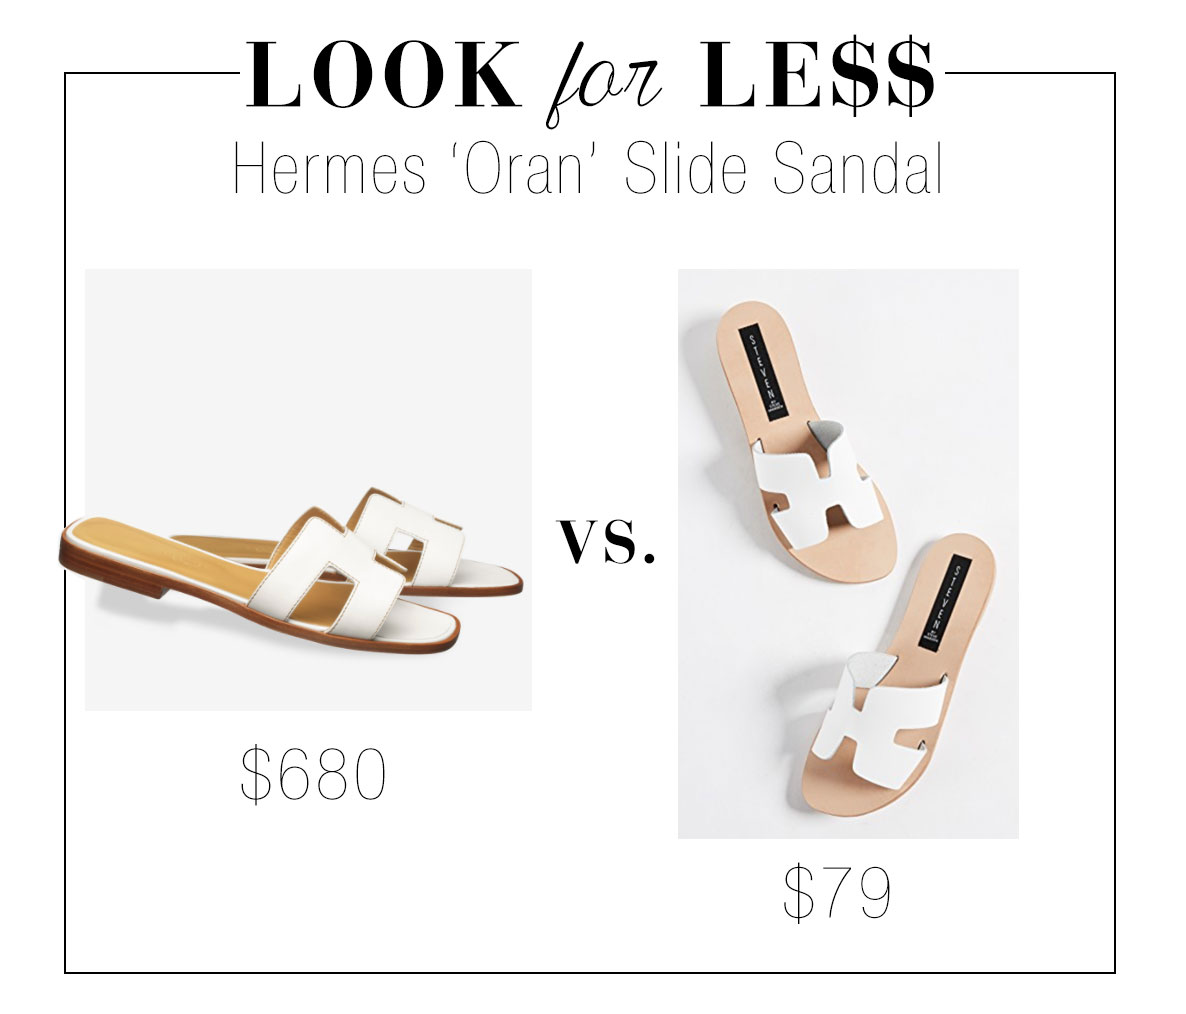 Hermes 'Oran' slide sandal dupe by Steve Madden